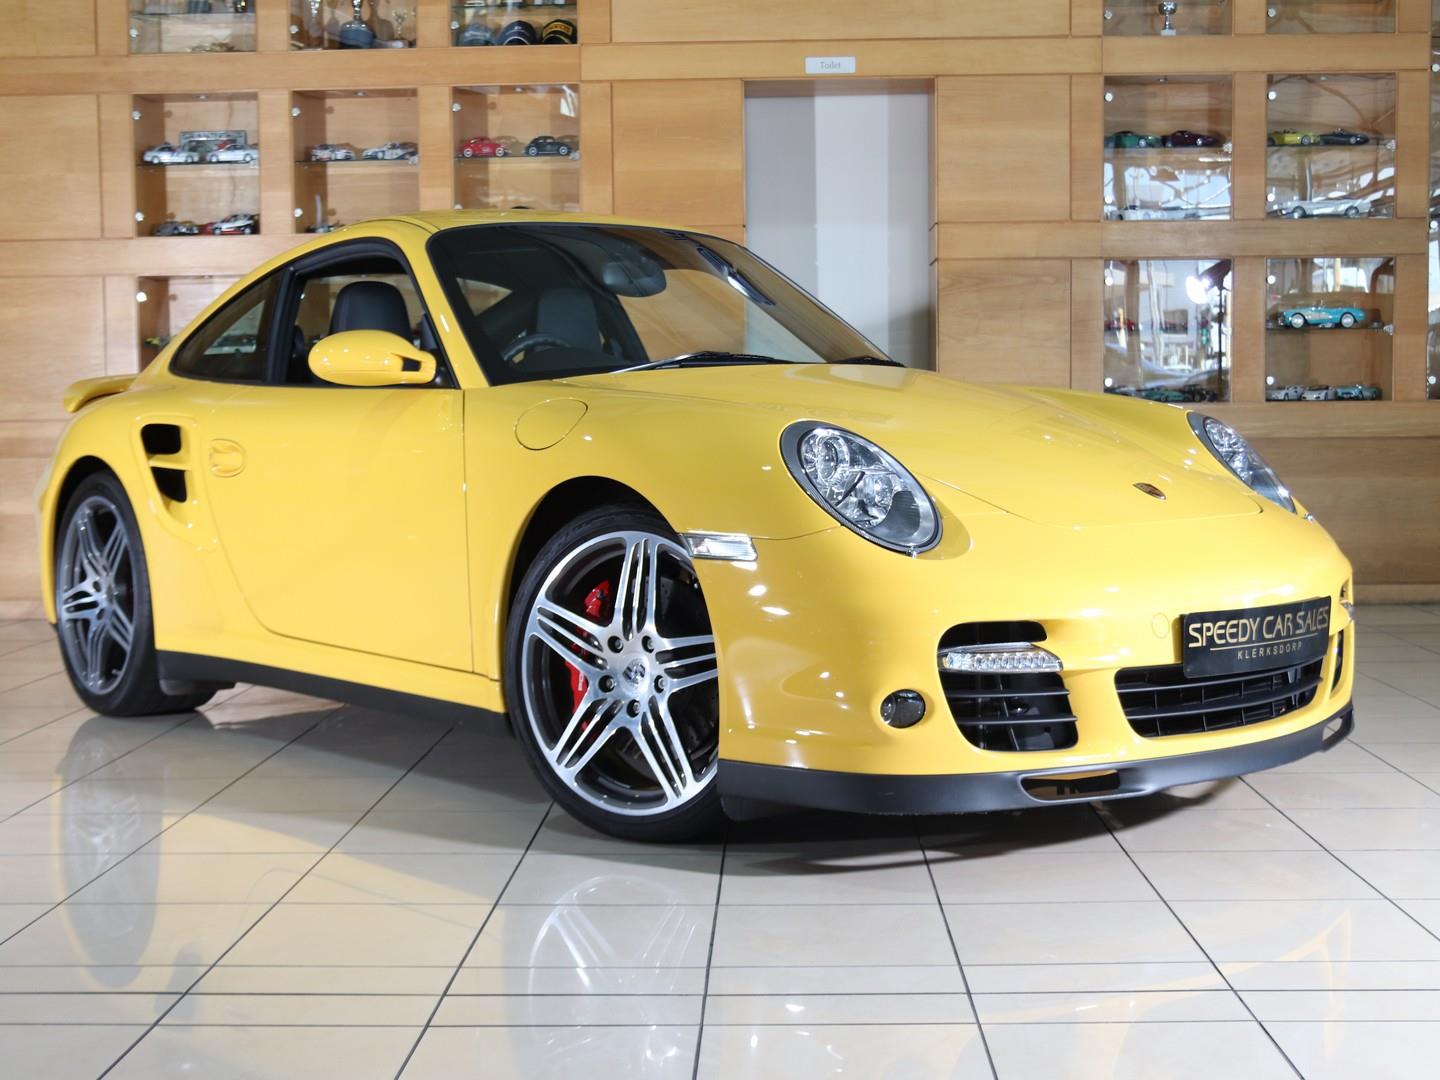 Porsche 911 (Turbo Auto) at Speedy Car Sales